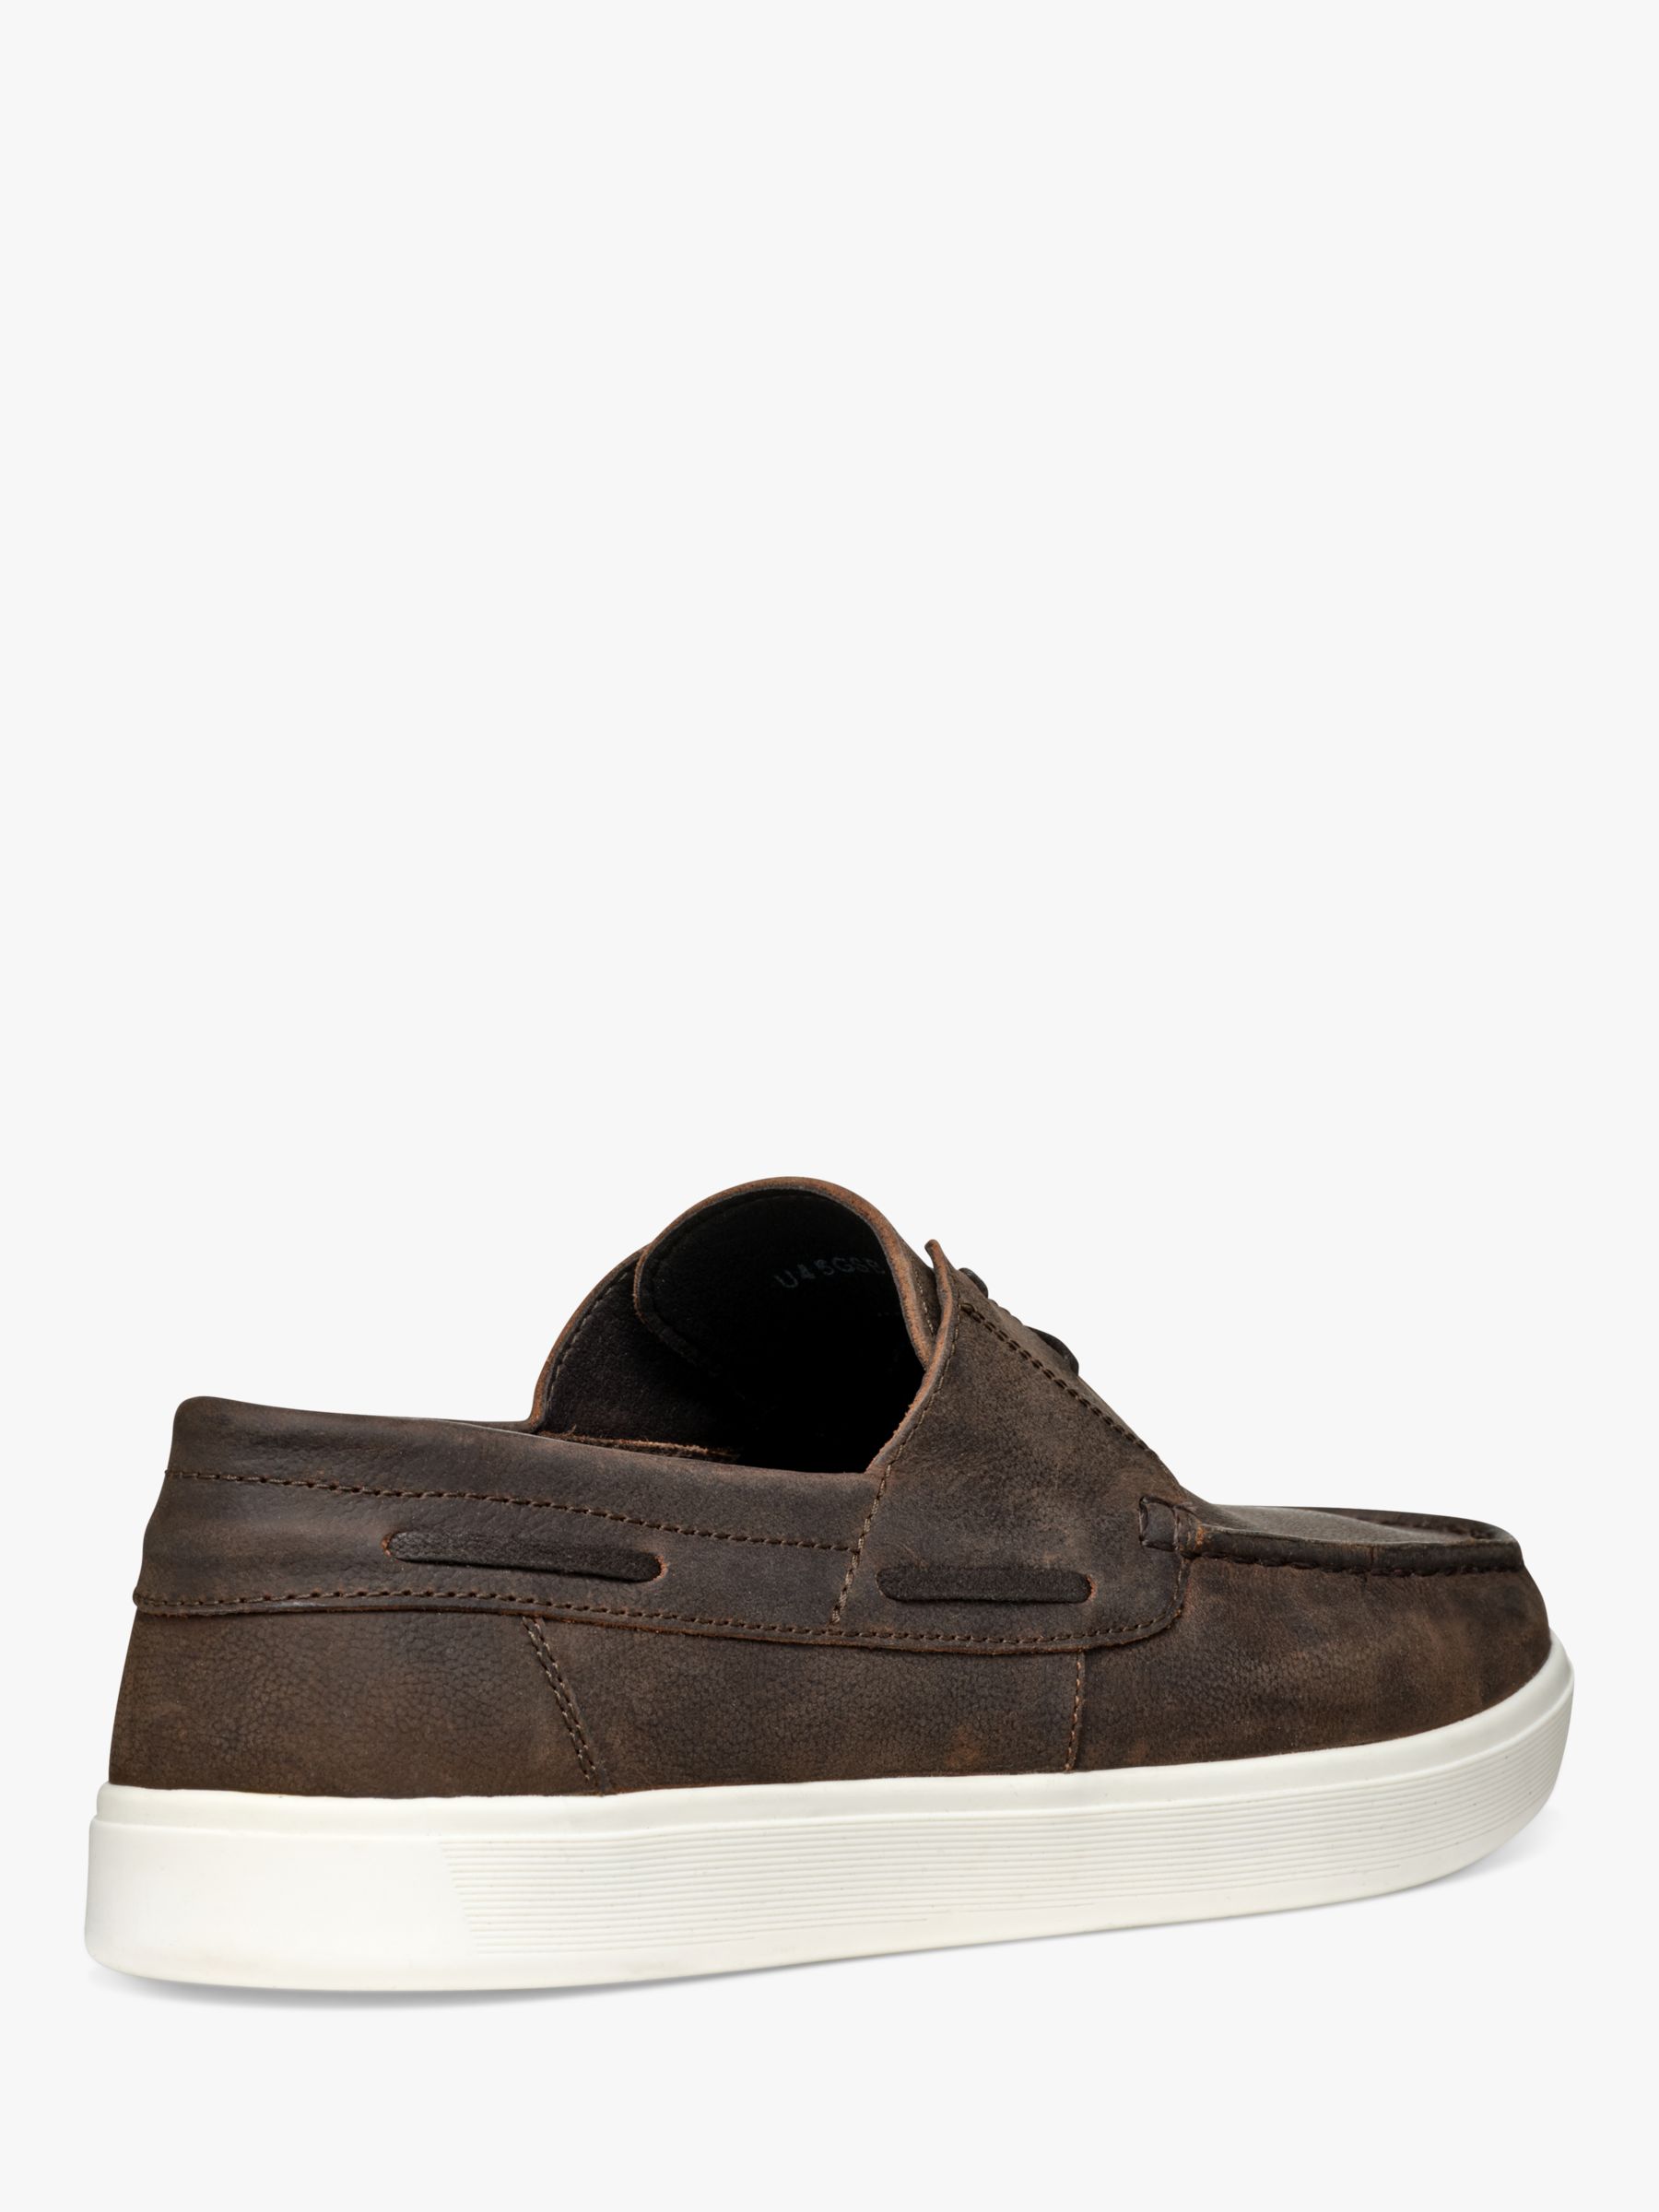 Geox Avola Leather Loafers, Light Brown, EU39